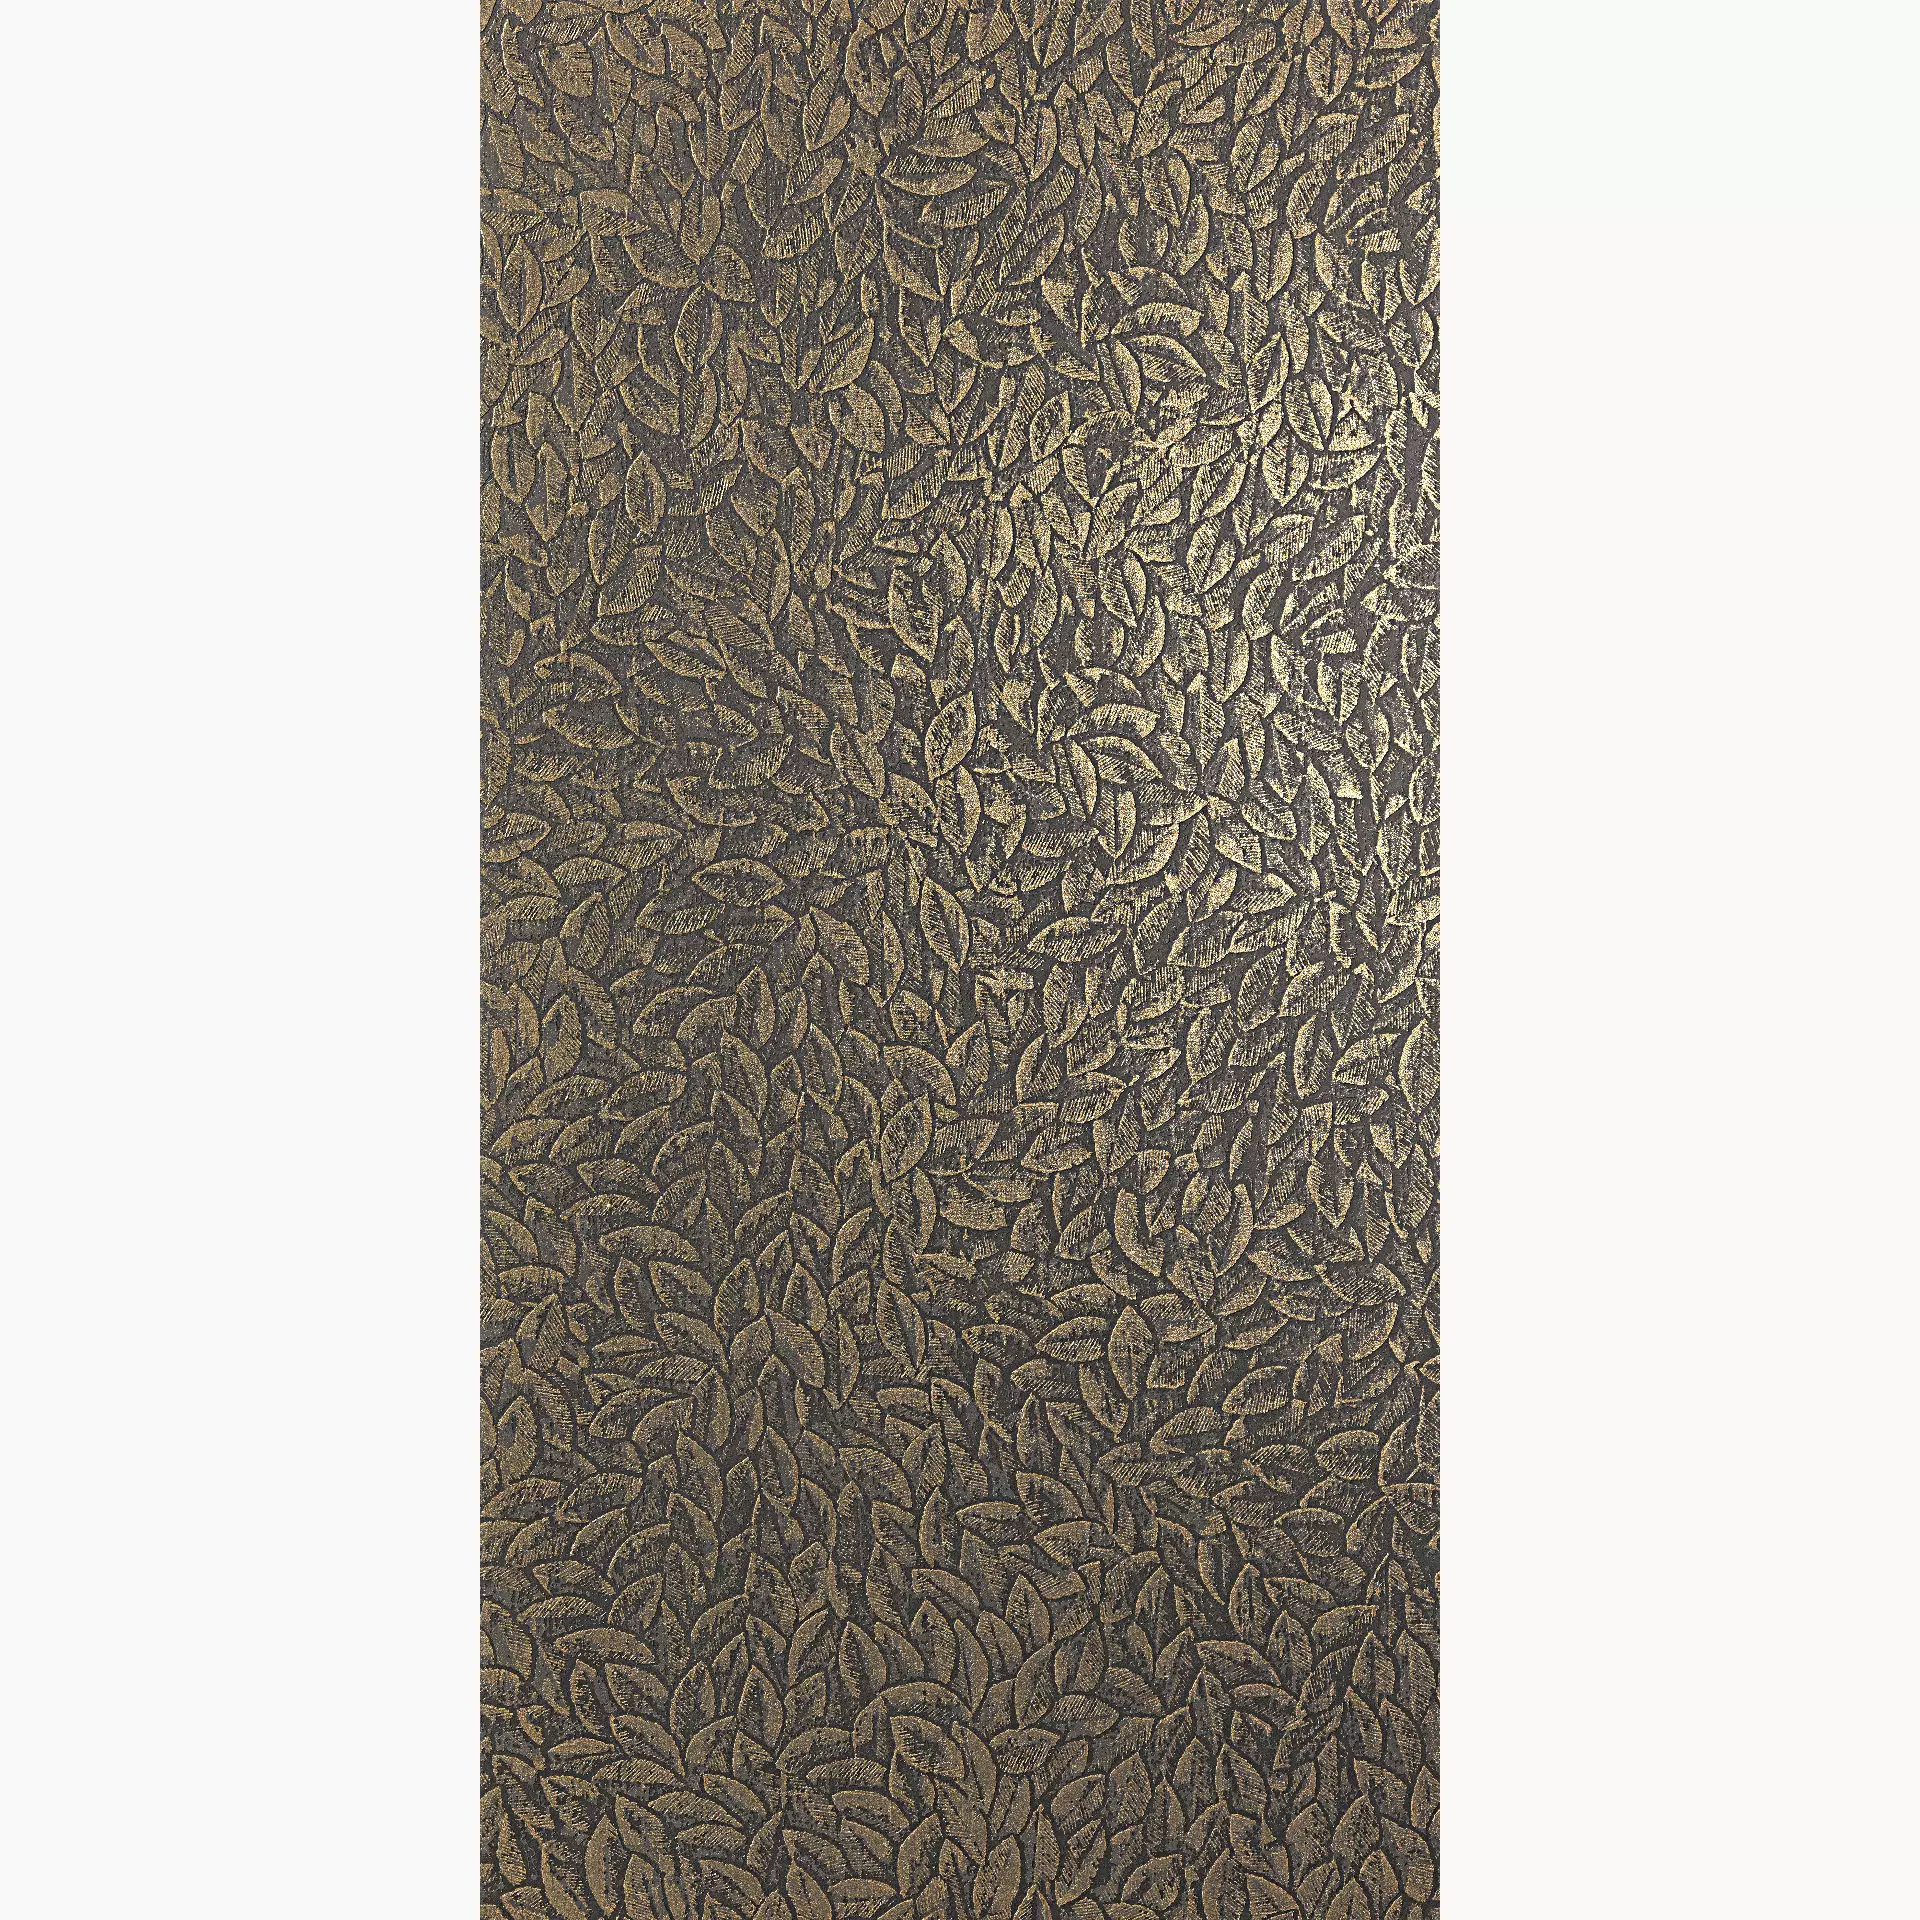 CIR Showall Foliage Gold Naturale Wall 23 1081879 60x120cm rectified 9,5mm